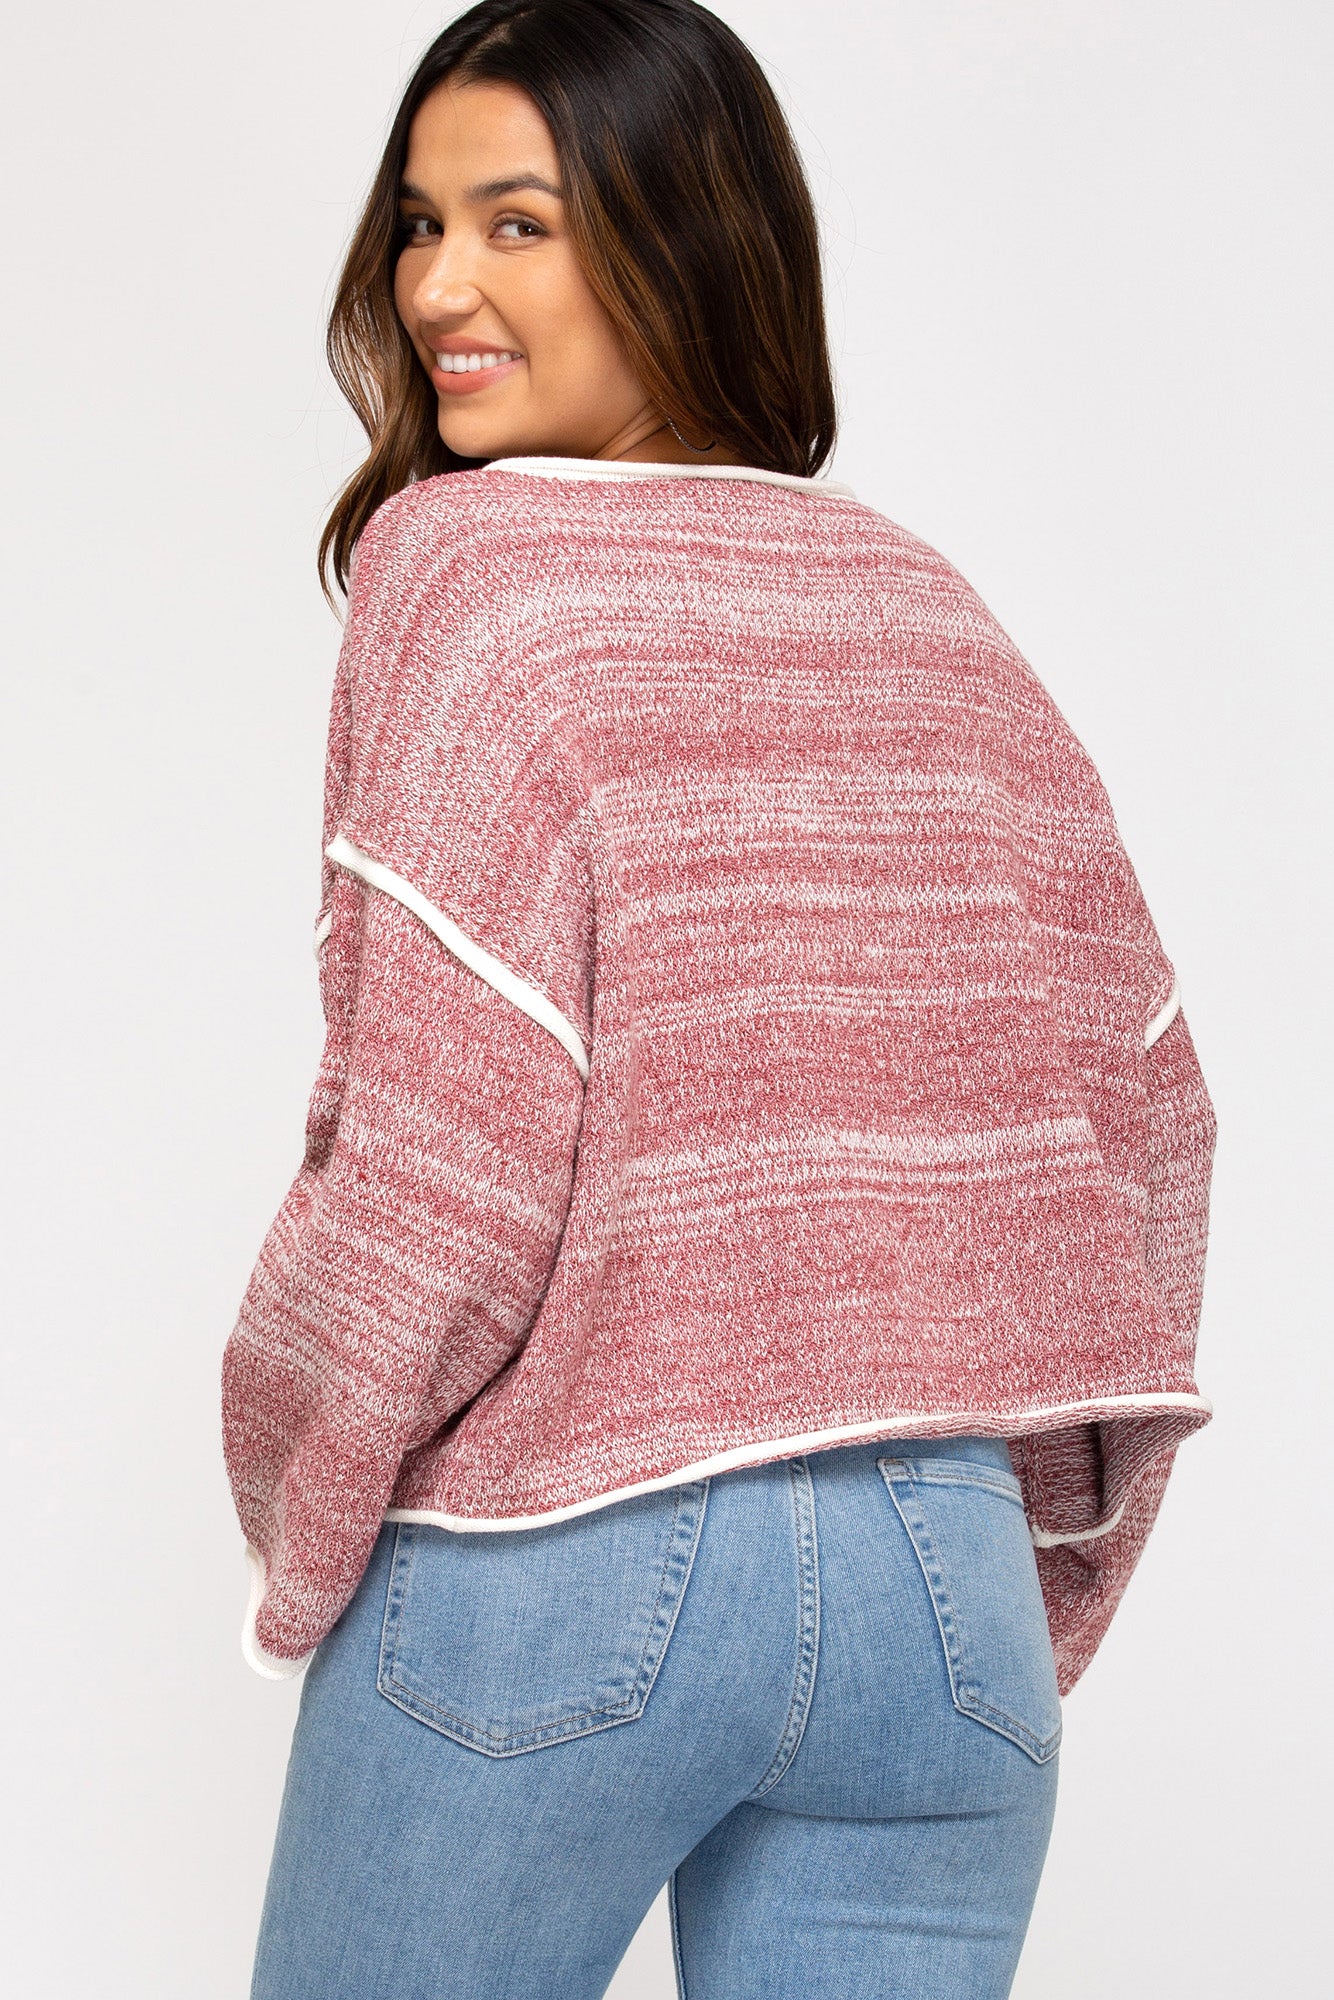 Wide Long Sleeve Sweater Top!